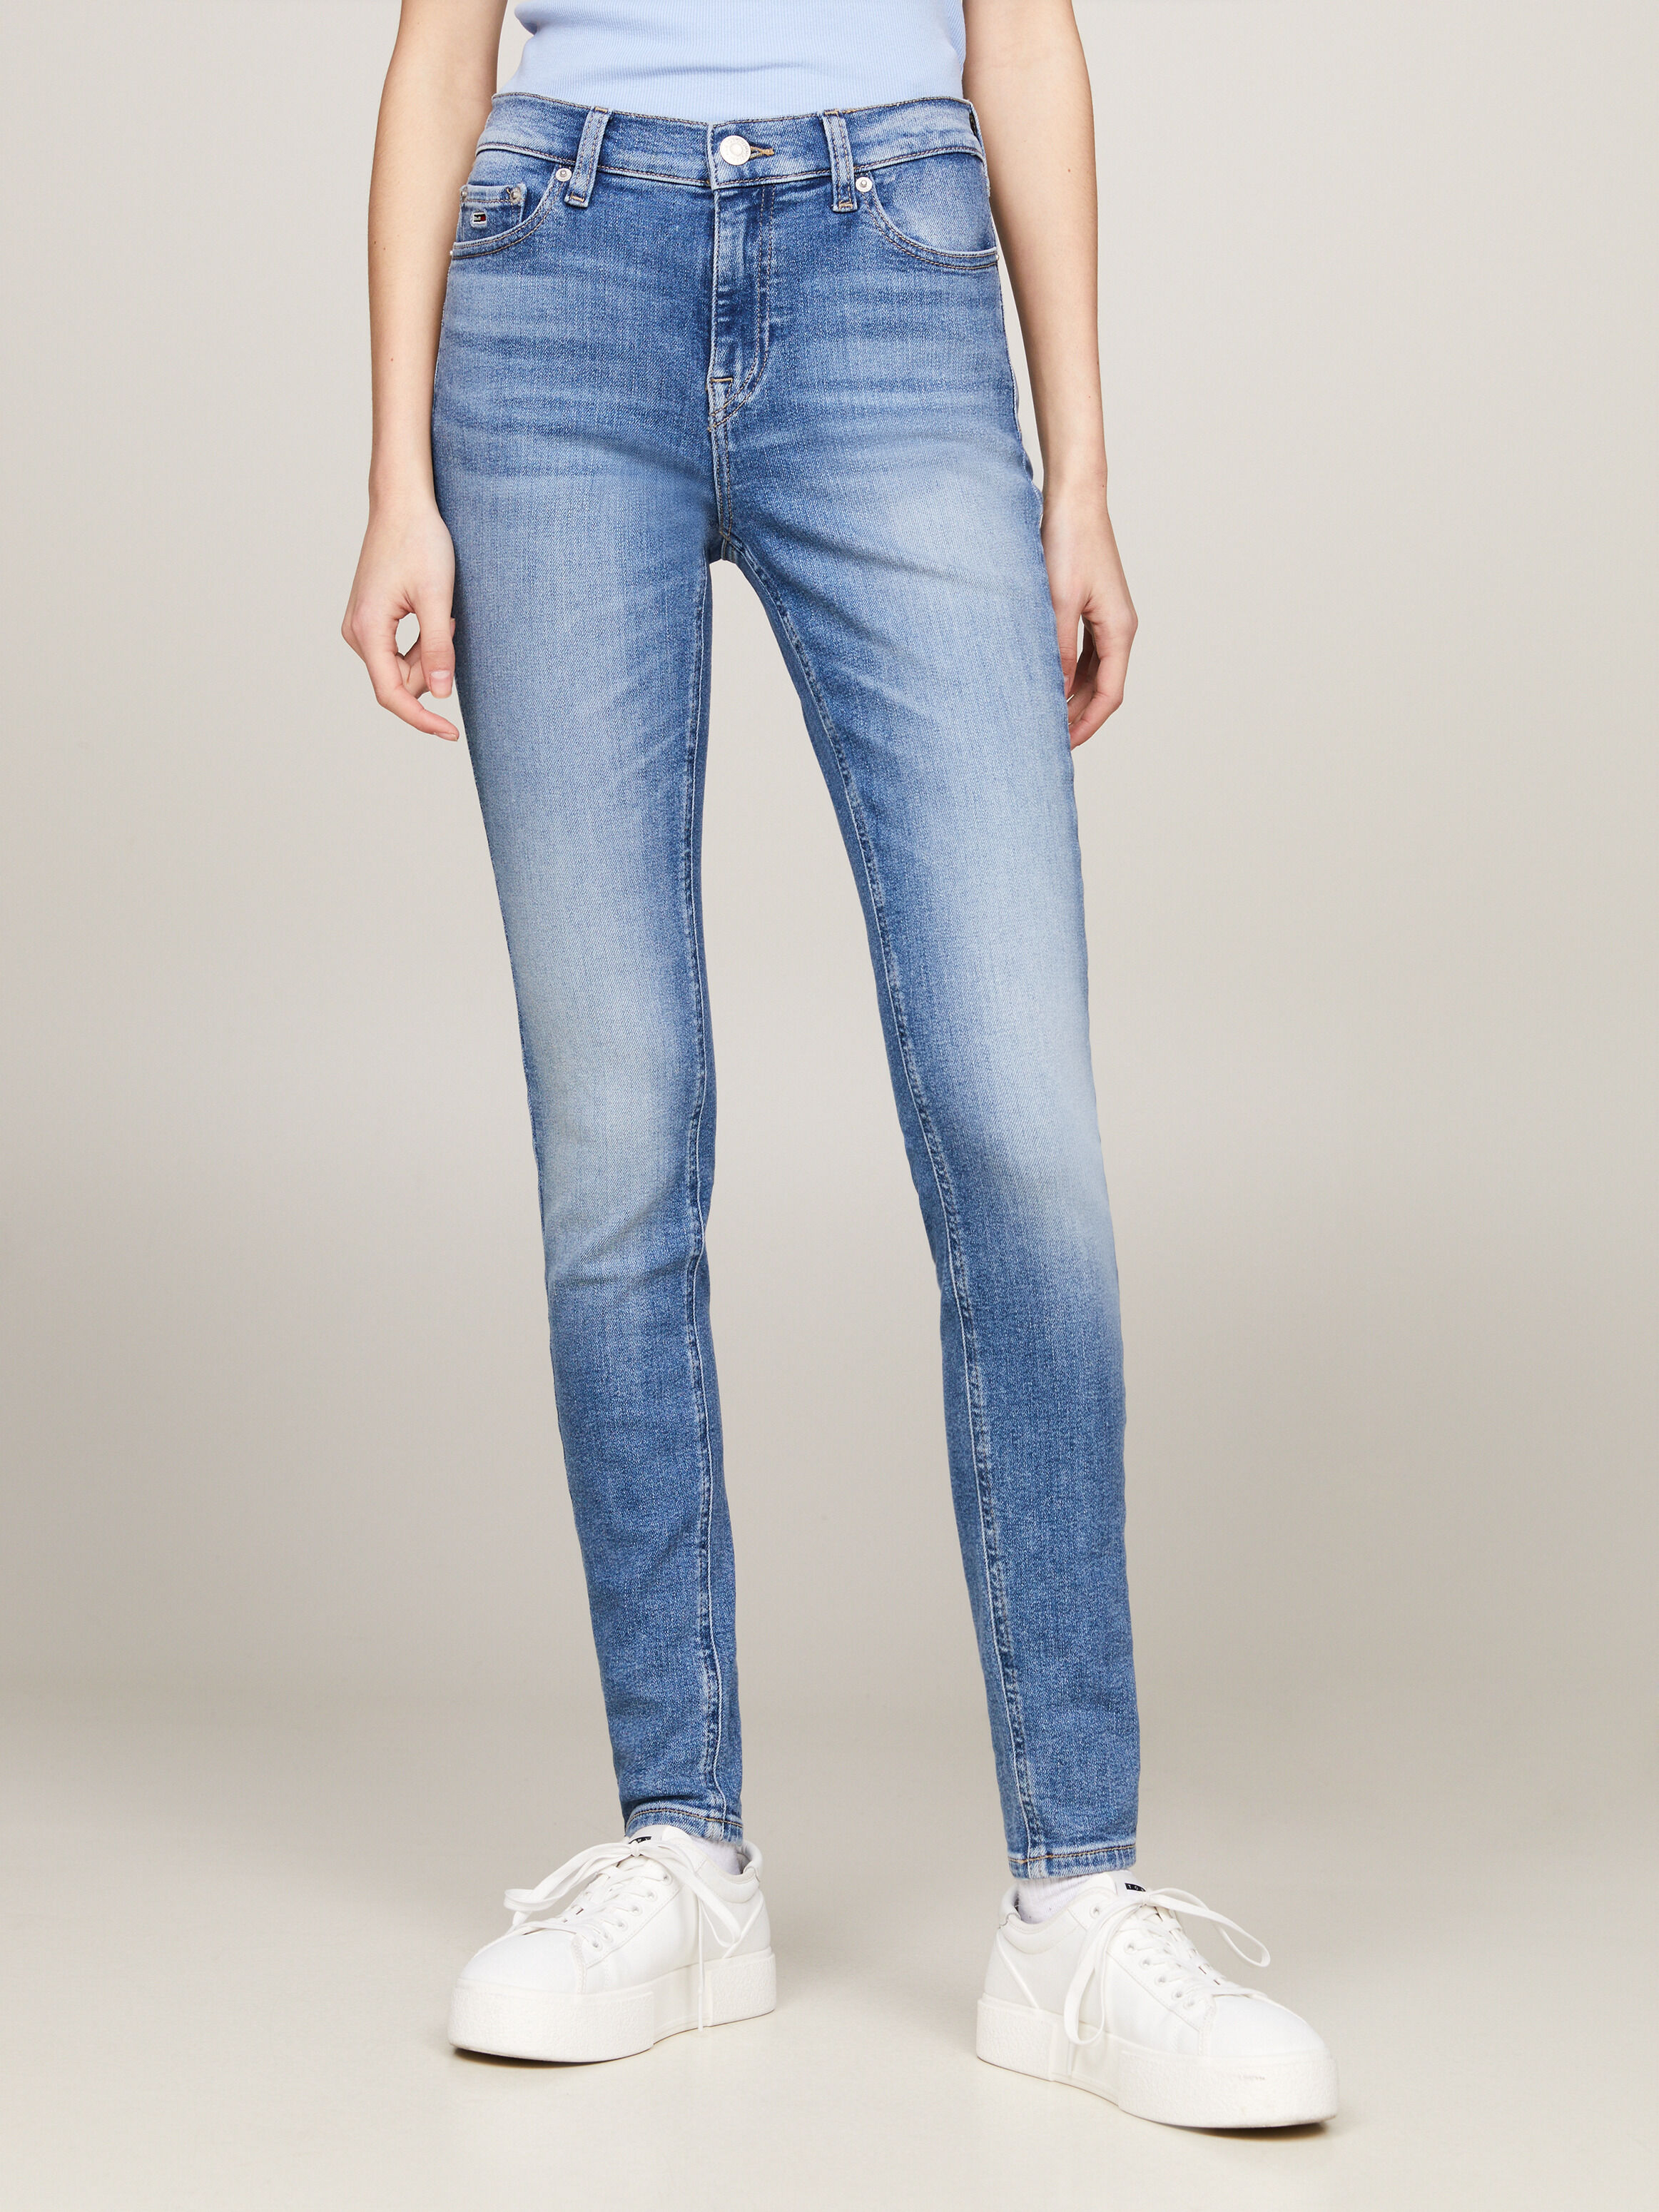 Nora Mid Rise Skinny Faded Jeans Denim Medium